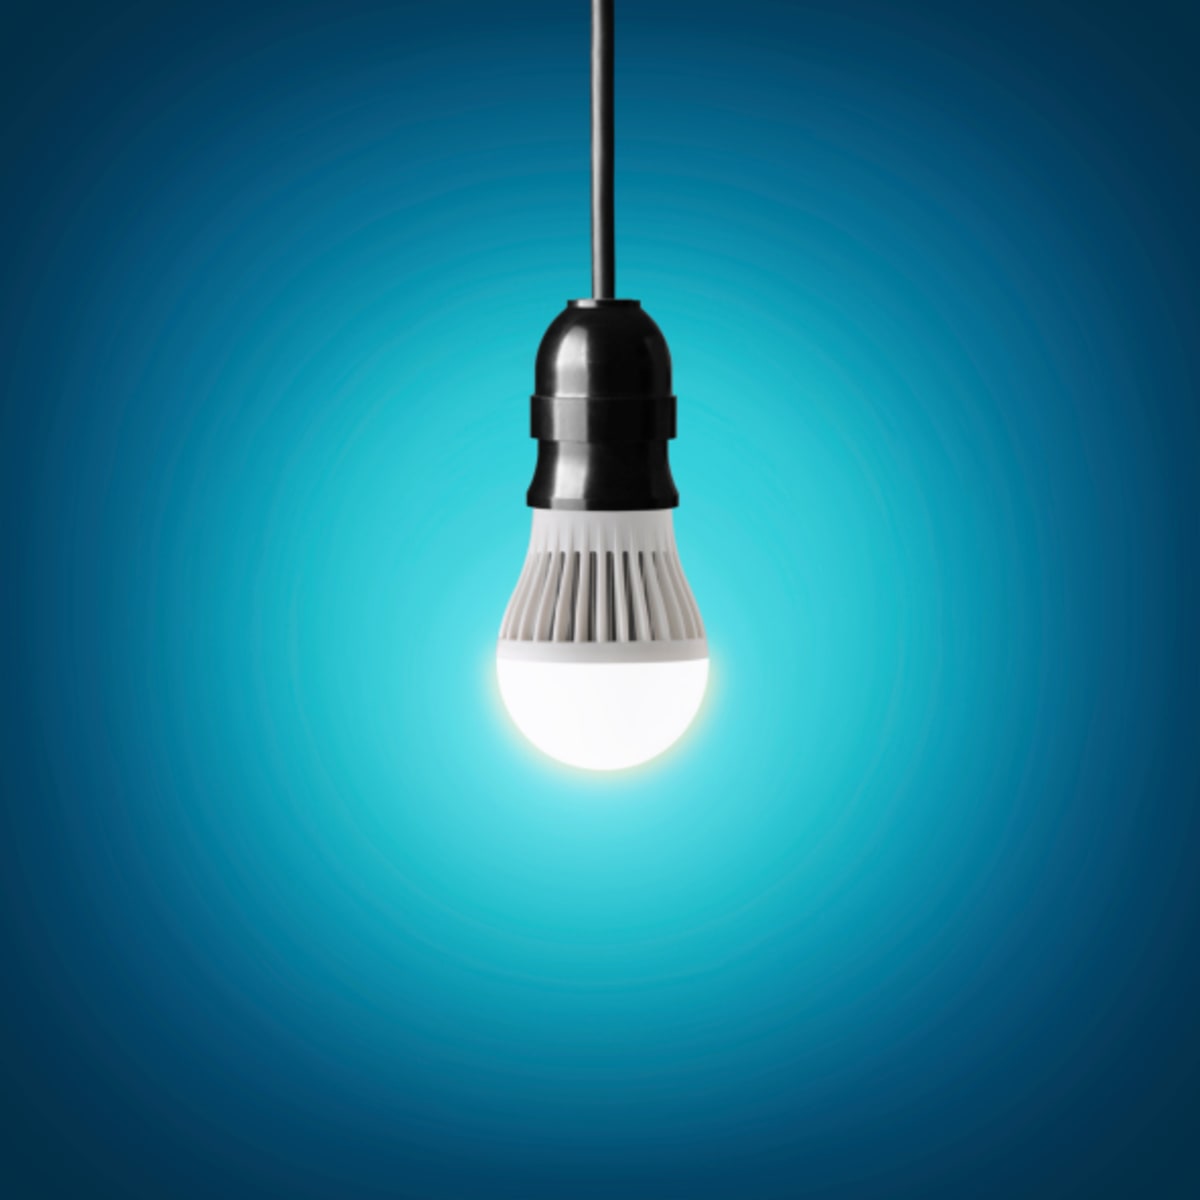 Vyměňte bežné žárovky za LED technologii 